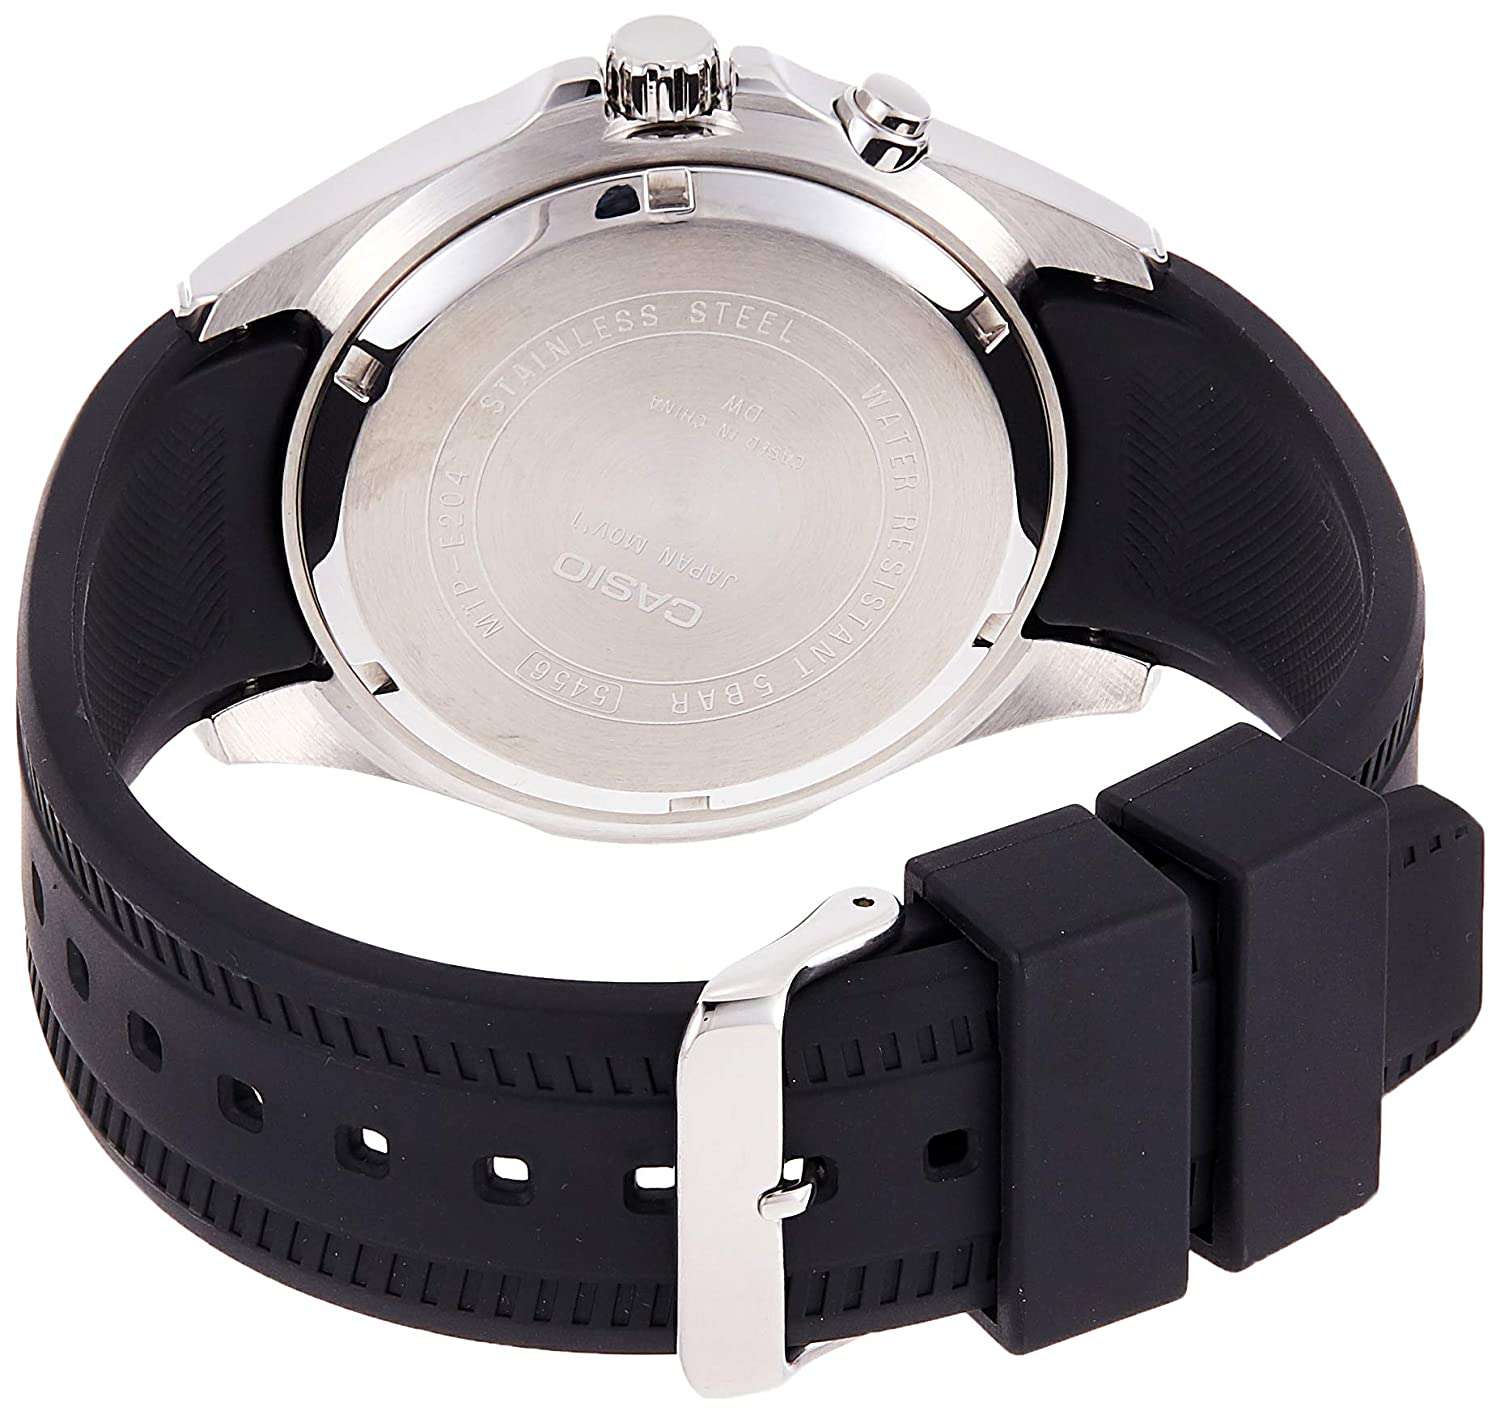 Casio MTP-E204-7A Super Illuminator Resin Strap Watch-Watch Portal Philippines